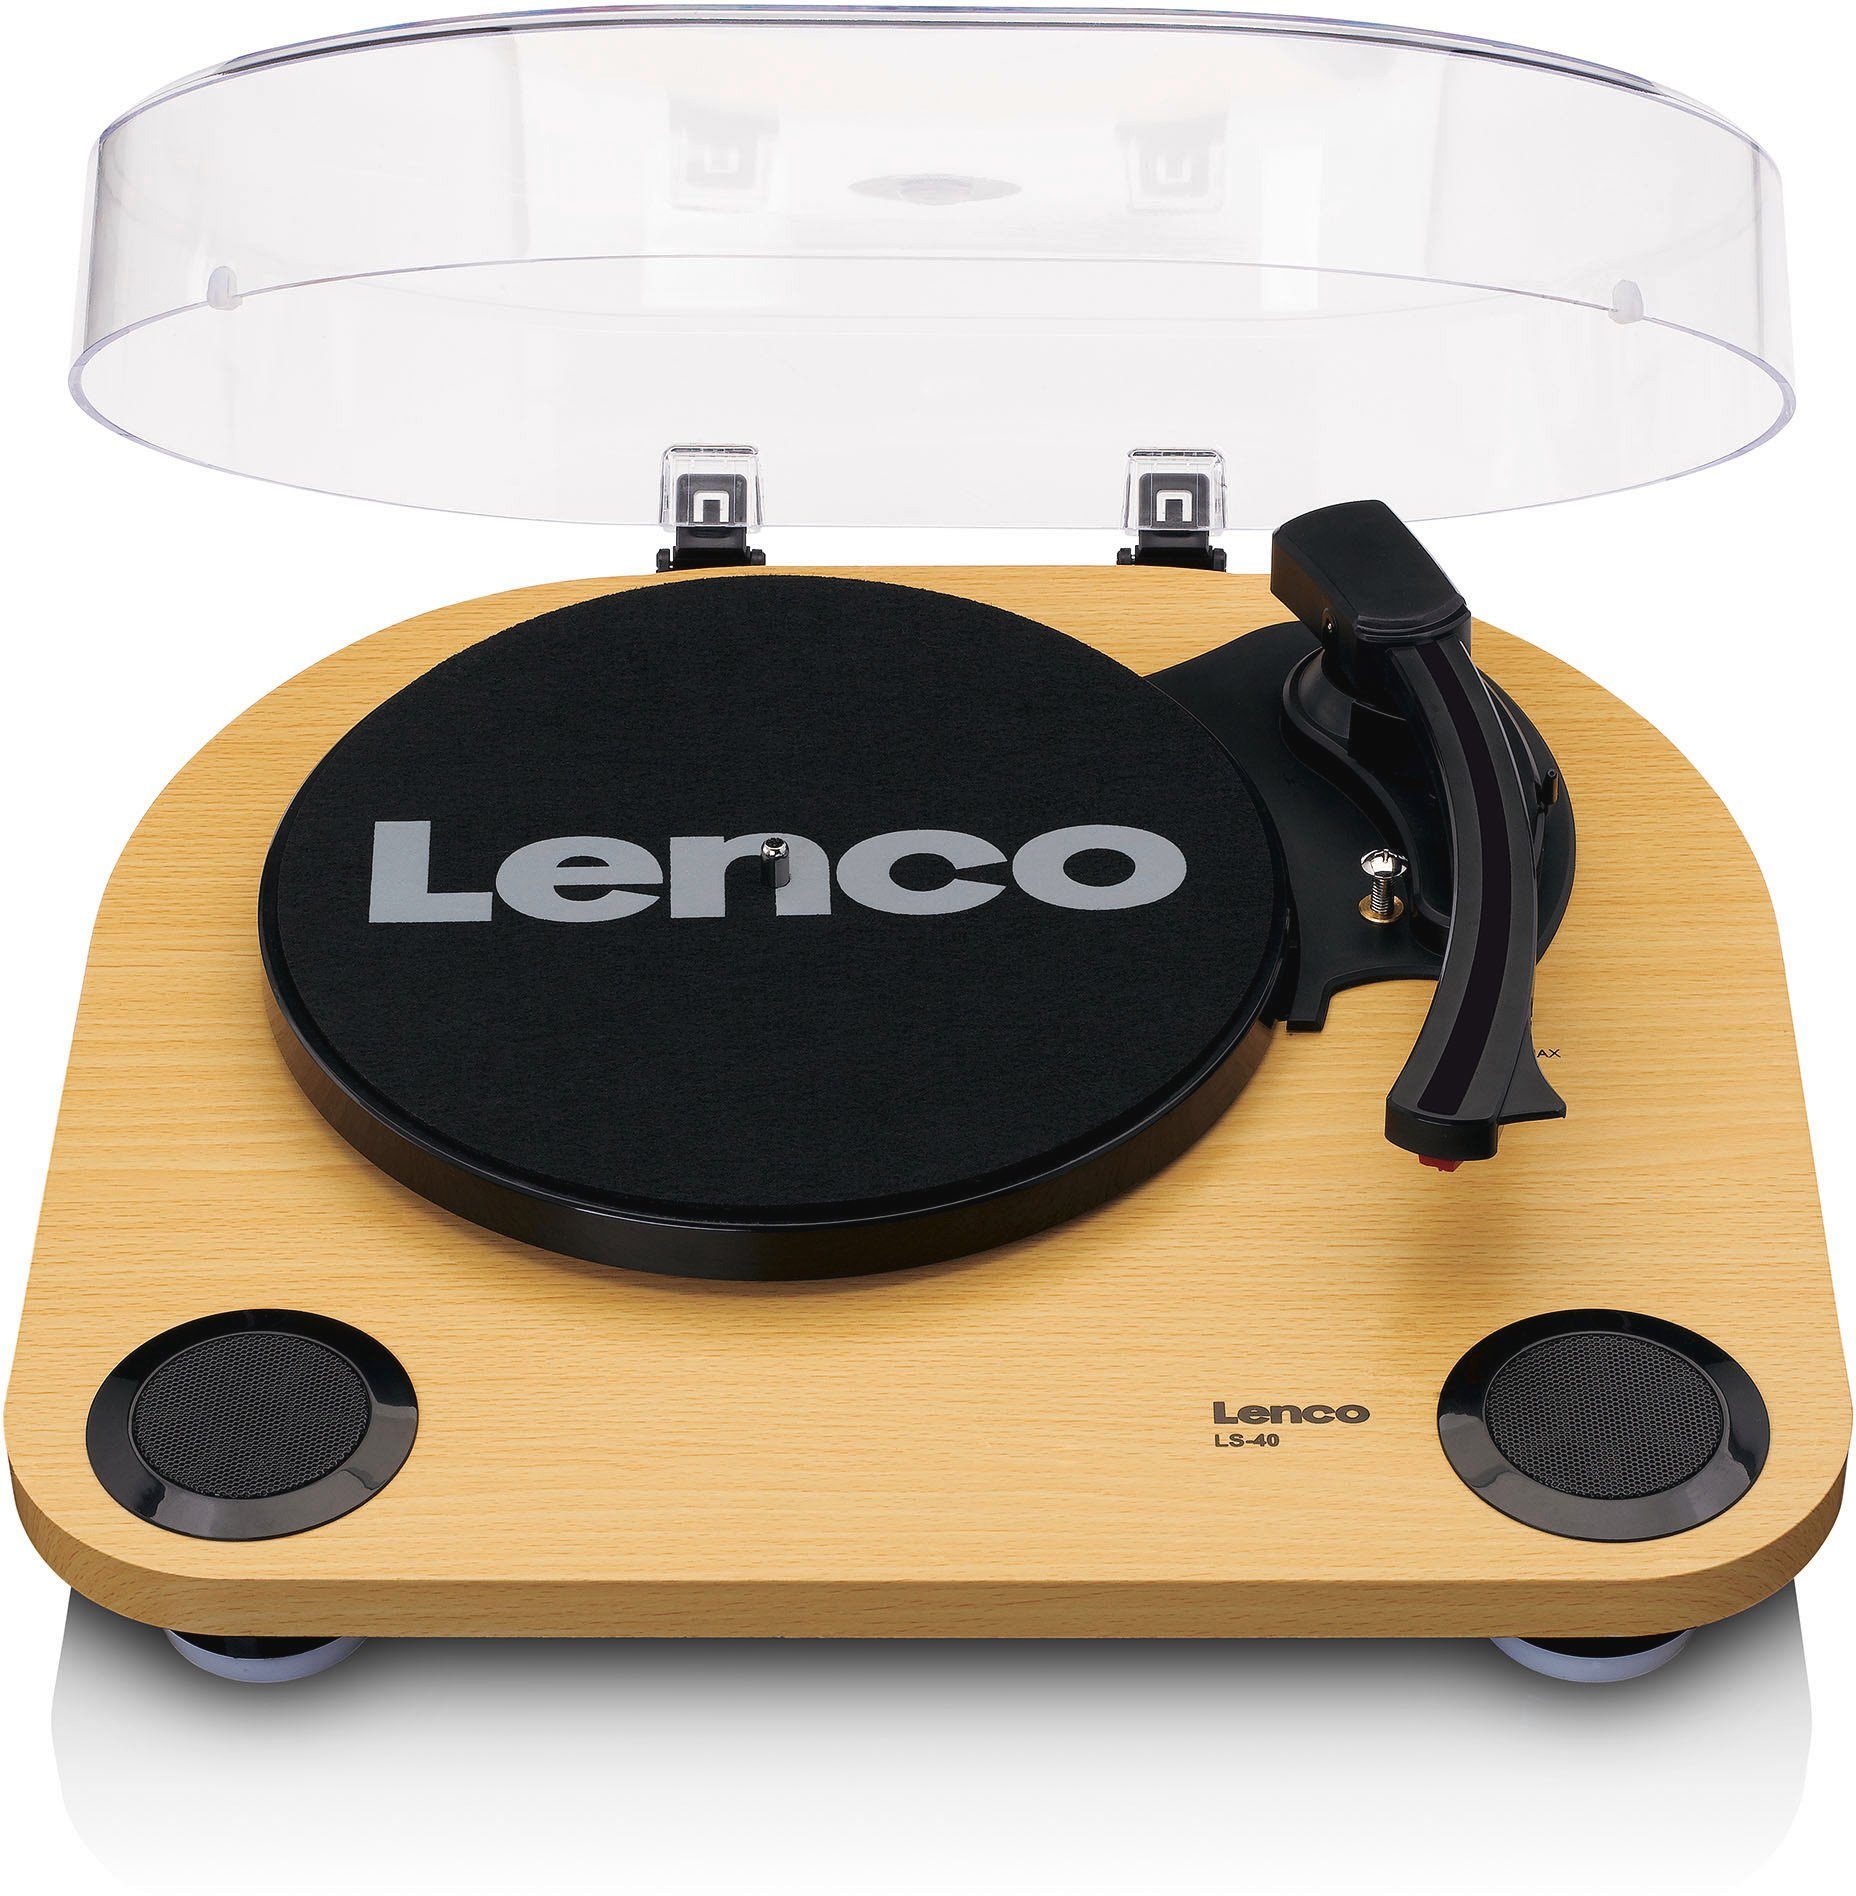 int. Plattenspieler (Riemenantrieb) Lenco mit Holz LS-40WD Plattenspieler Lautsprechern